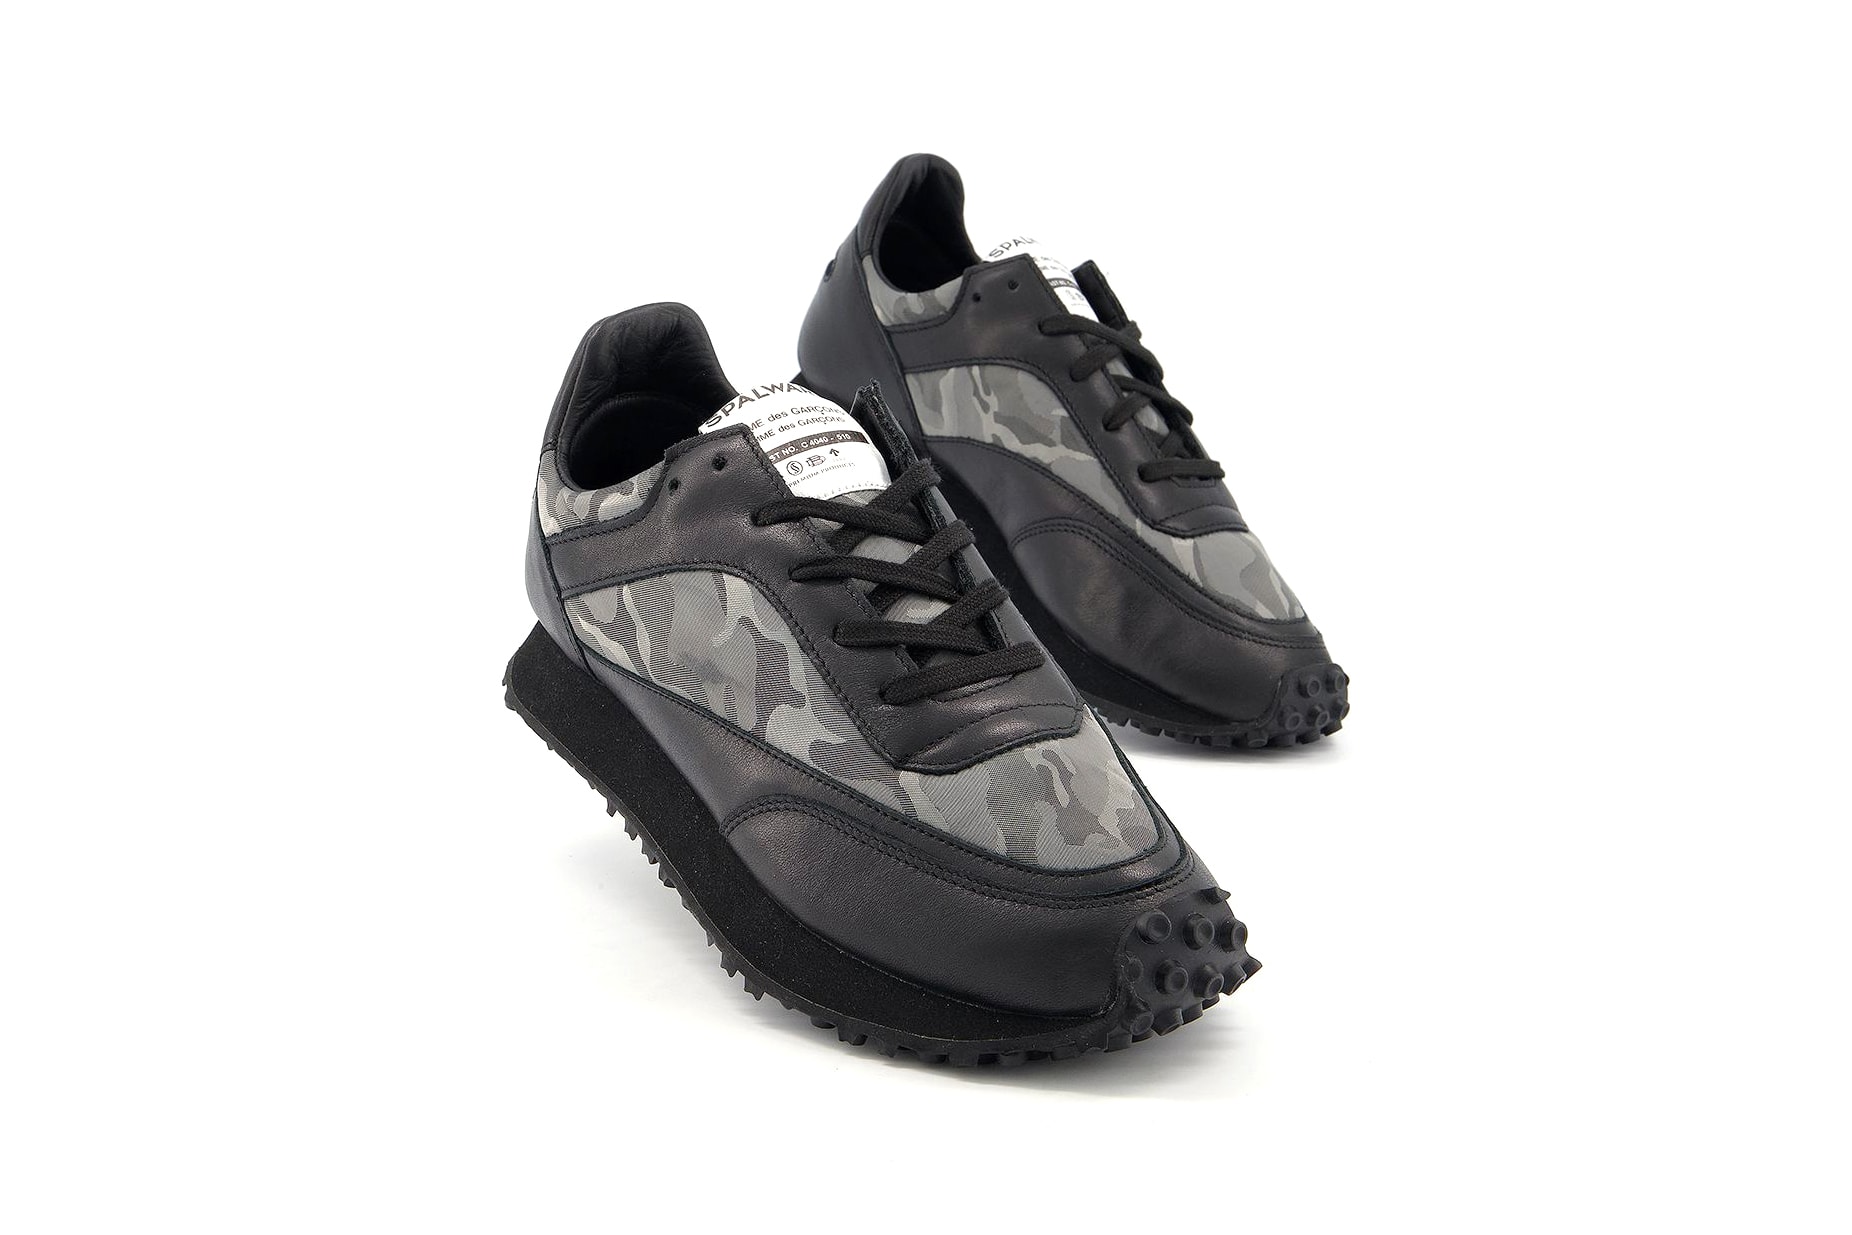 COMME des GARÇONS COMME des GARÇONS CDG x Spalwart Tempo Trainers Grey Camouflage Rei Kawakubo Sneaker Release Information Drop Date Closer First Look Black 